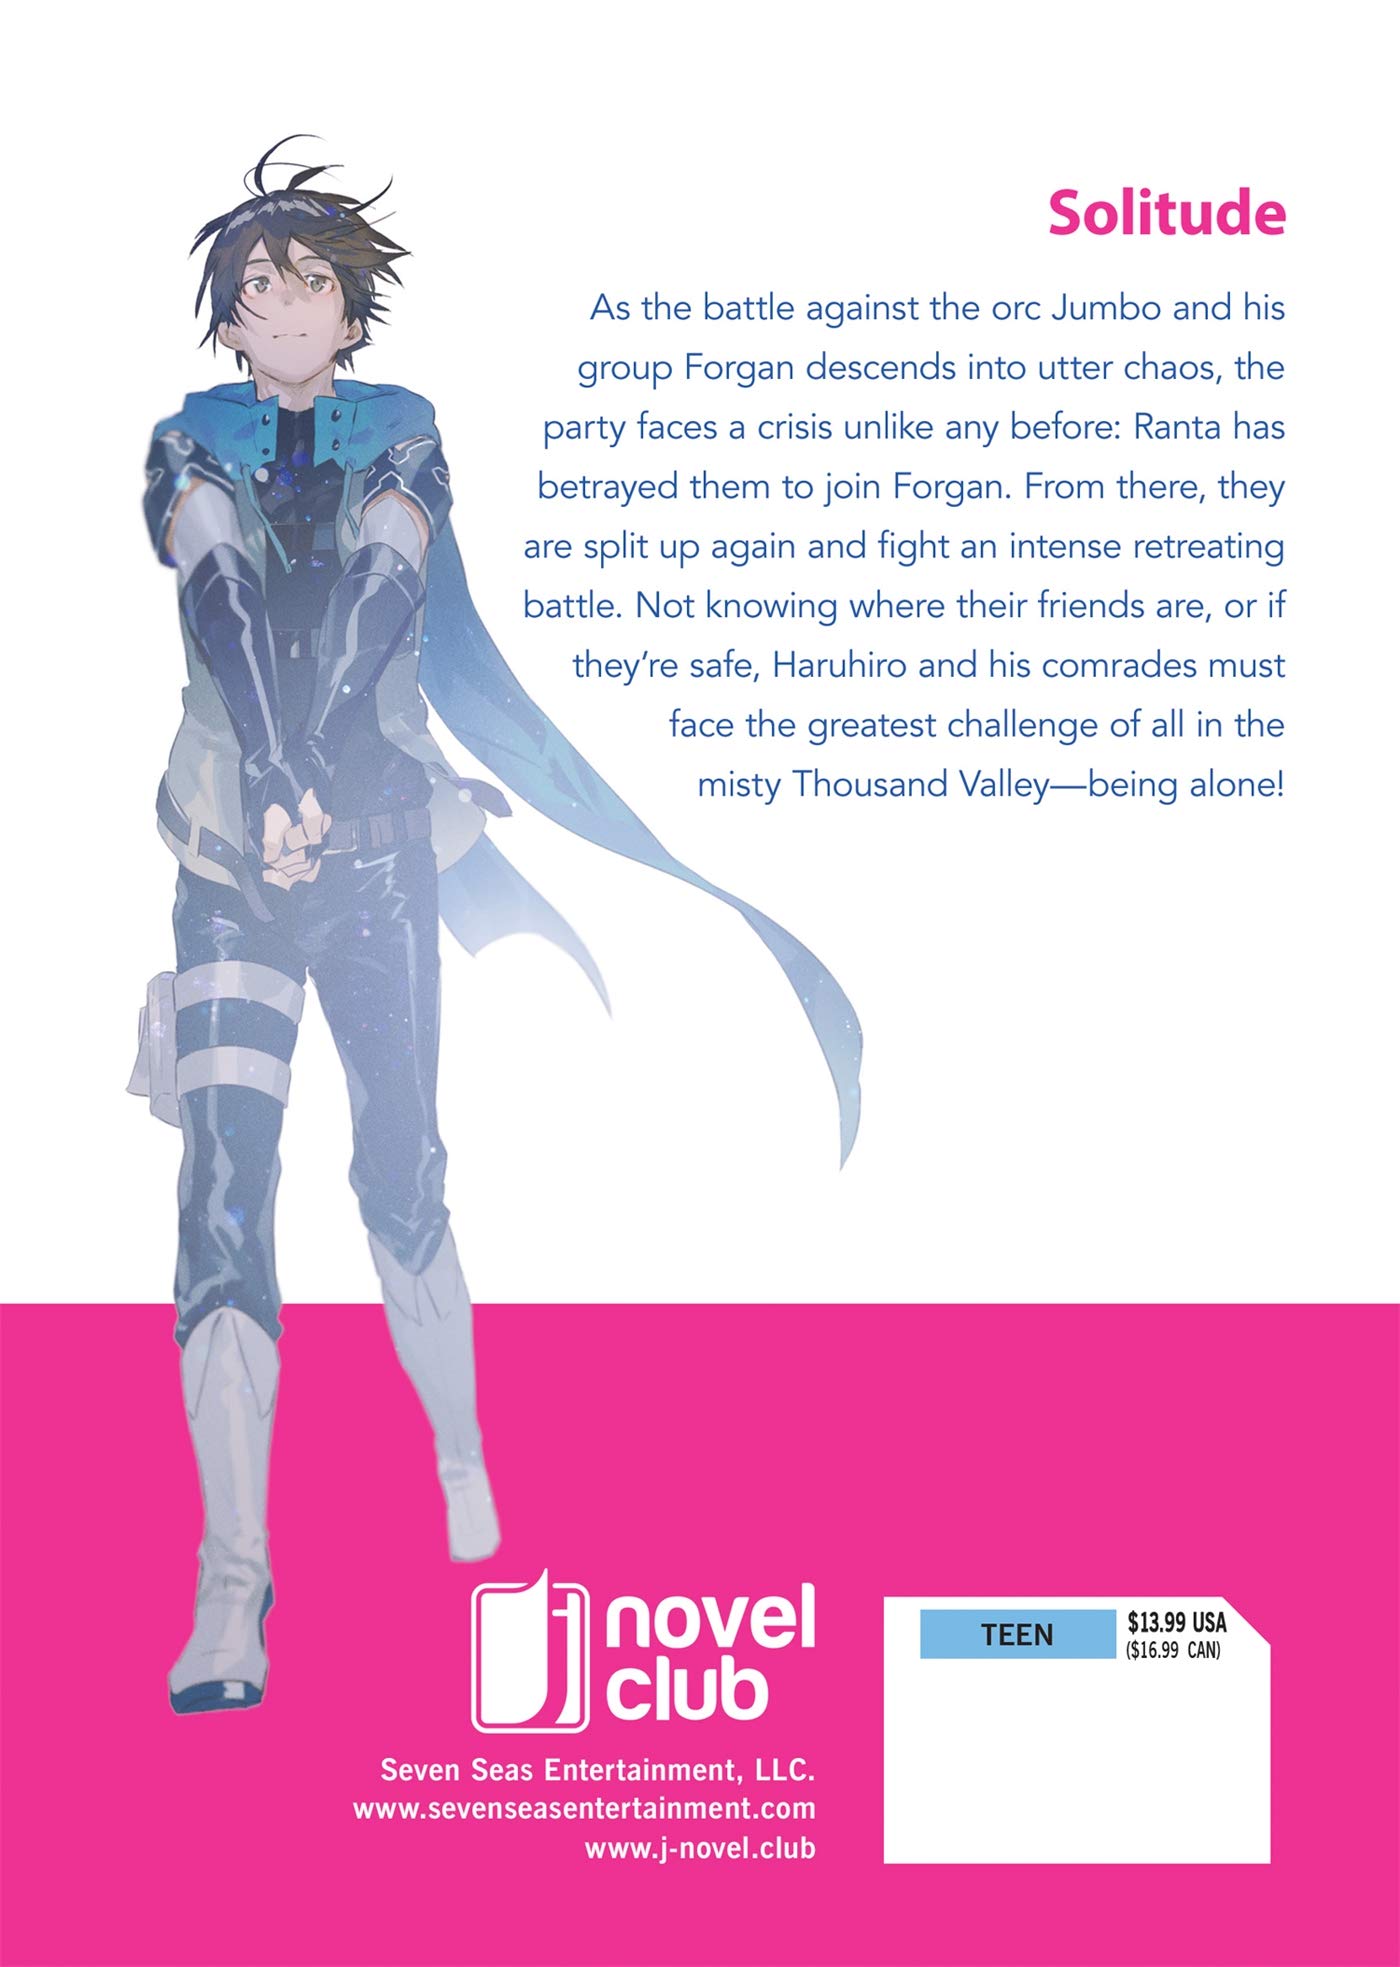 Grimgar of Fantasy and Ash (Light Novel) - Volume 9 | Ao Jyumonji